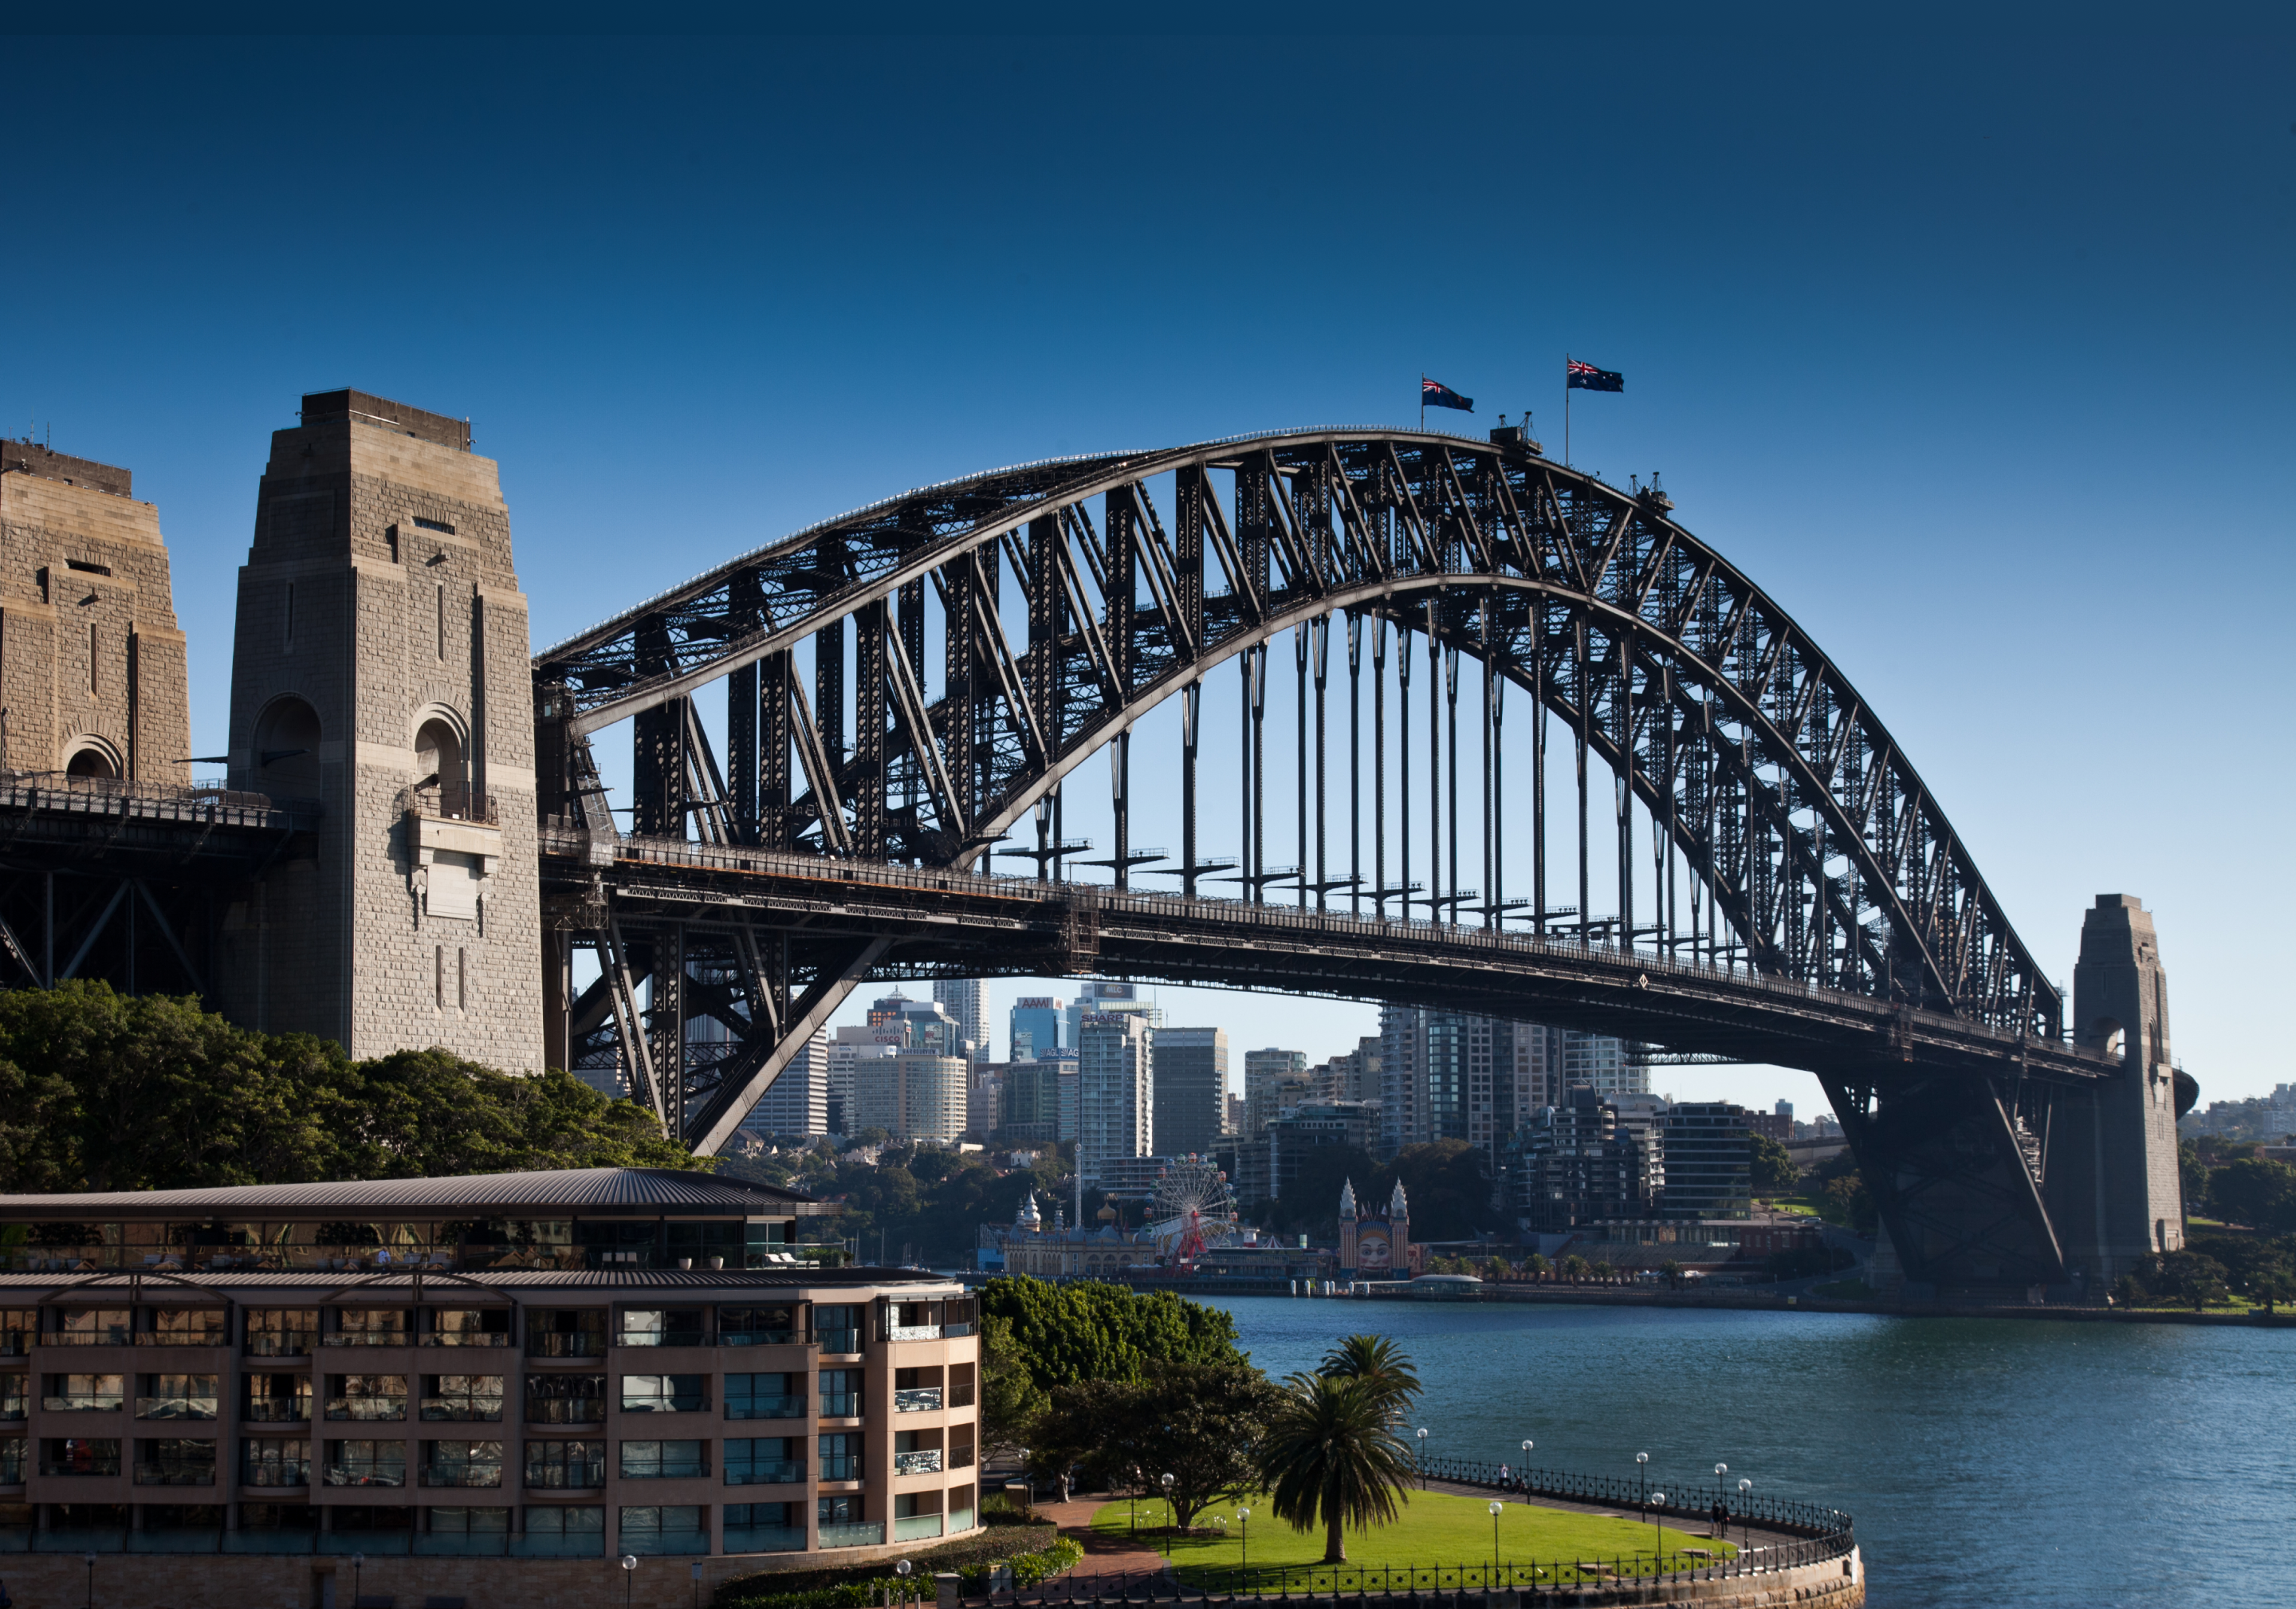 Harbour bridge. Сиднейский мост Харбор-бридж. Сиднейский Харбор-бридж, Австралия. Мост Харбор бридж в Австралии. Мост Харбор бридж сверху.